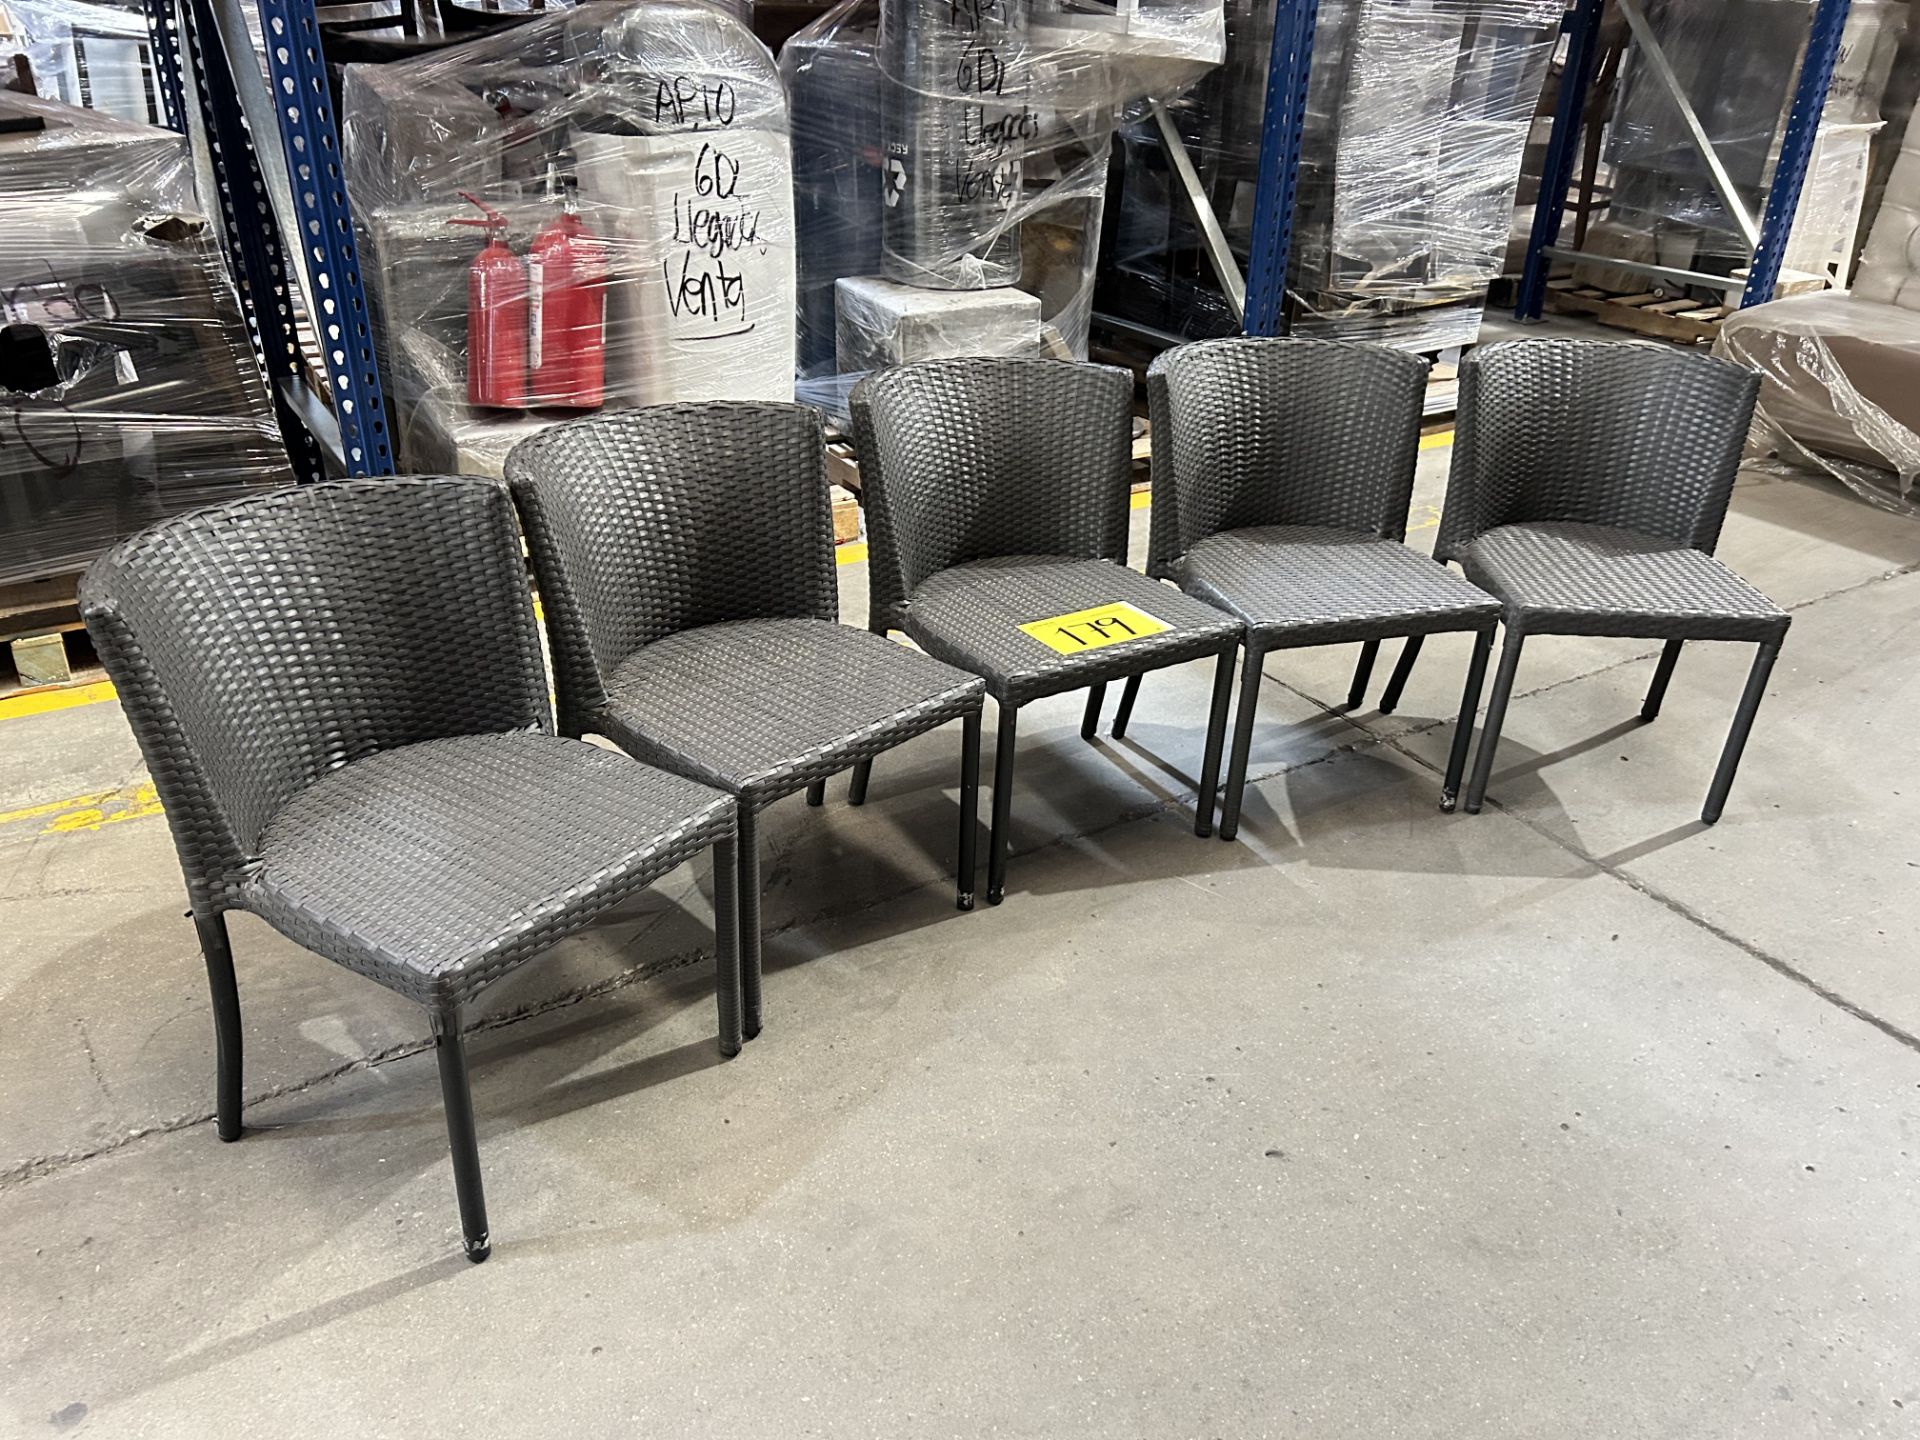 5 sillas de ratán respaldo curvo para exterior Color Café Medidas 55 cm x 62 cm x 74 cm (Equipo Usa - Image 2 of 5